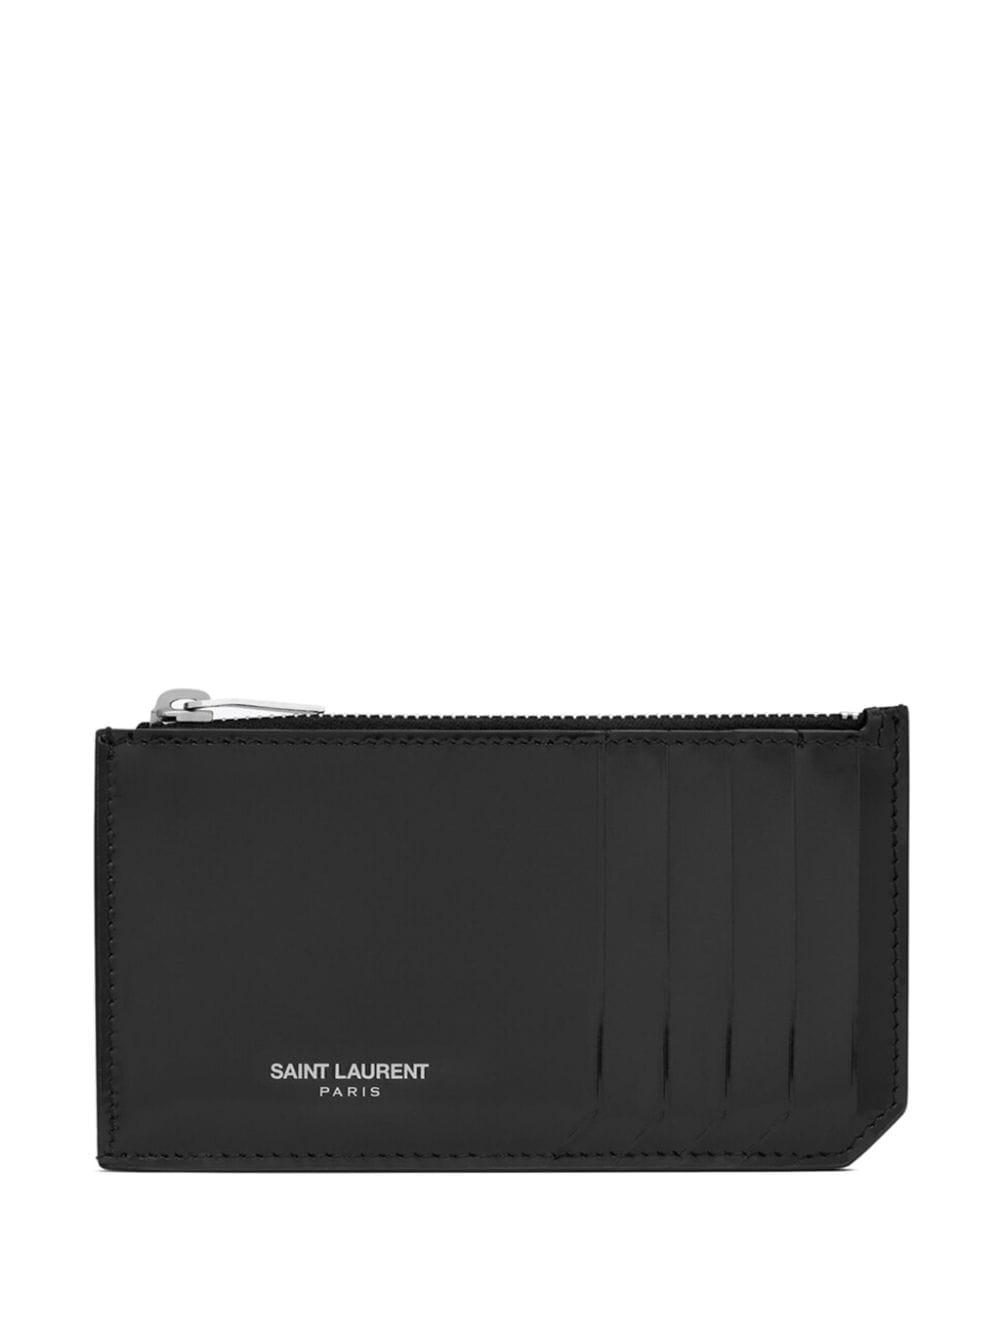 Saint Laurent Paris Fragments Leather Card Holder in Black for Men | Lyst UK